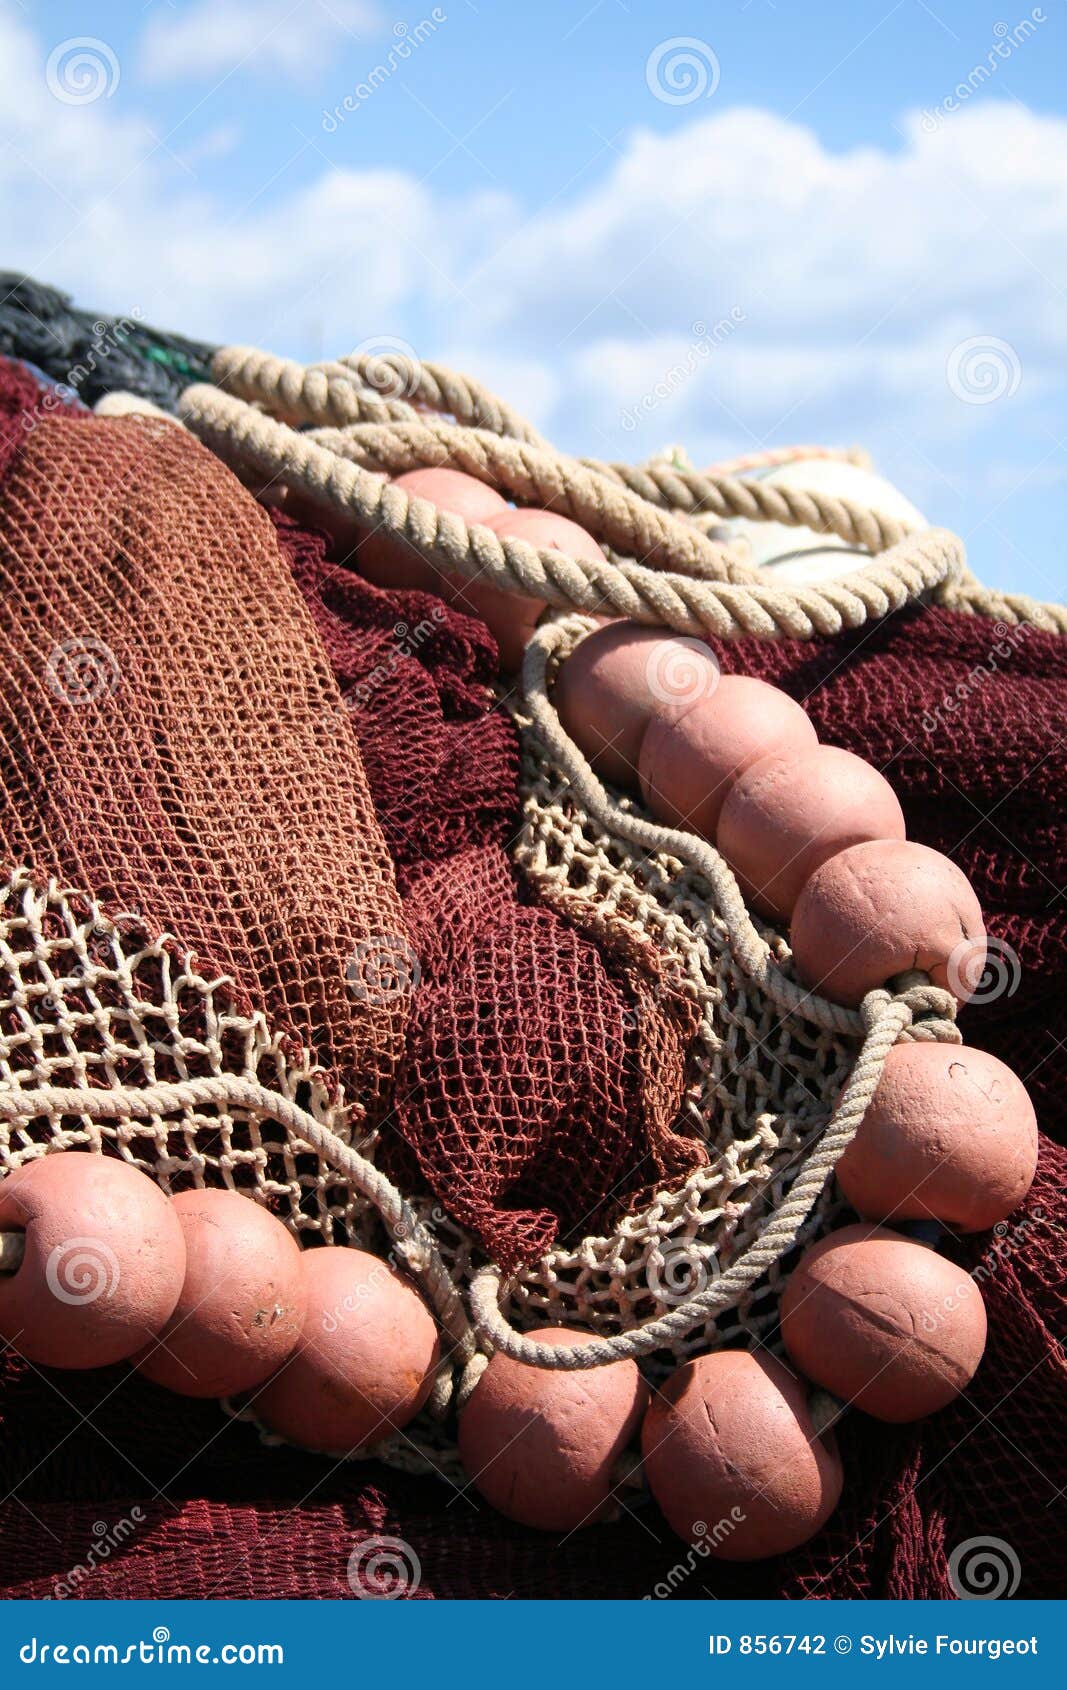 Fishing net stock photo. Image of cork, catch, heavy, spherical - 856742